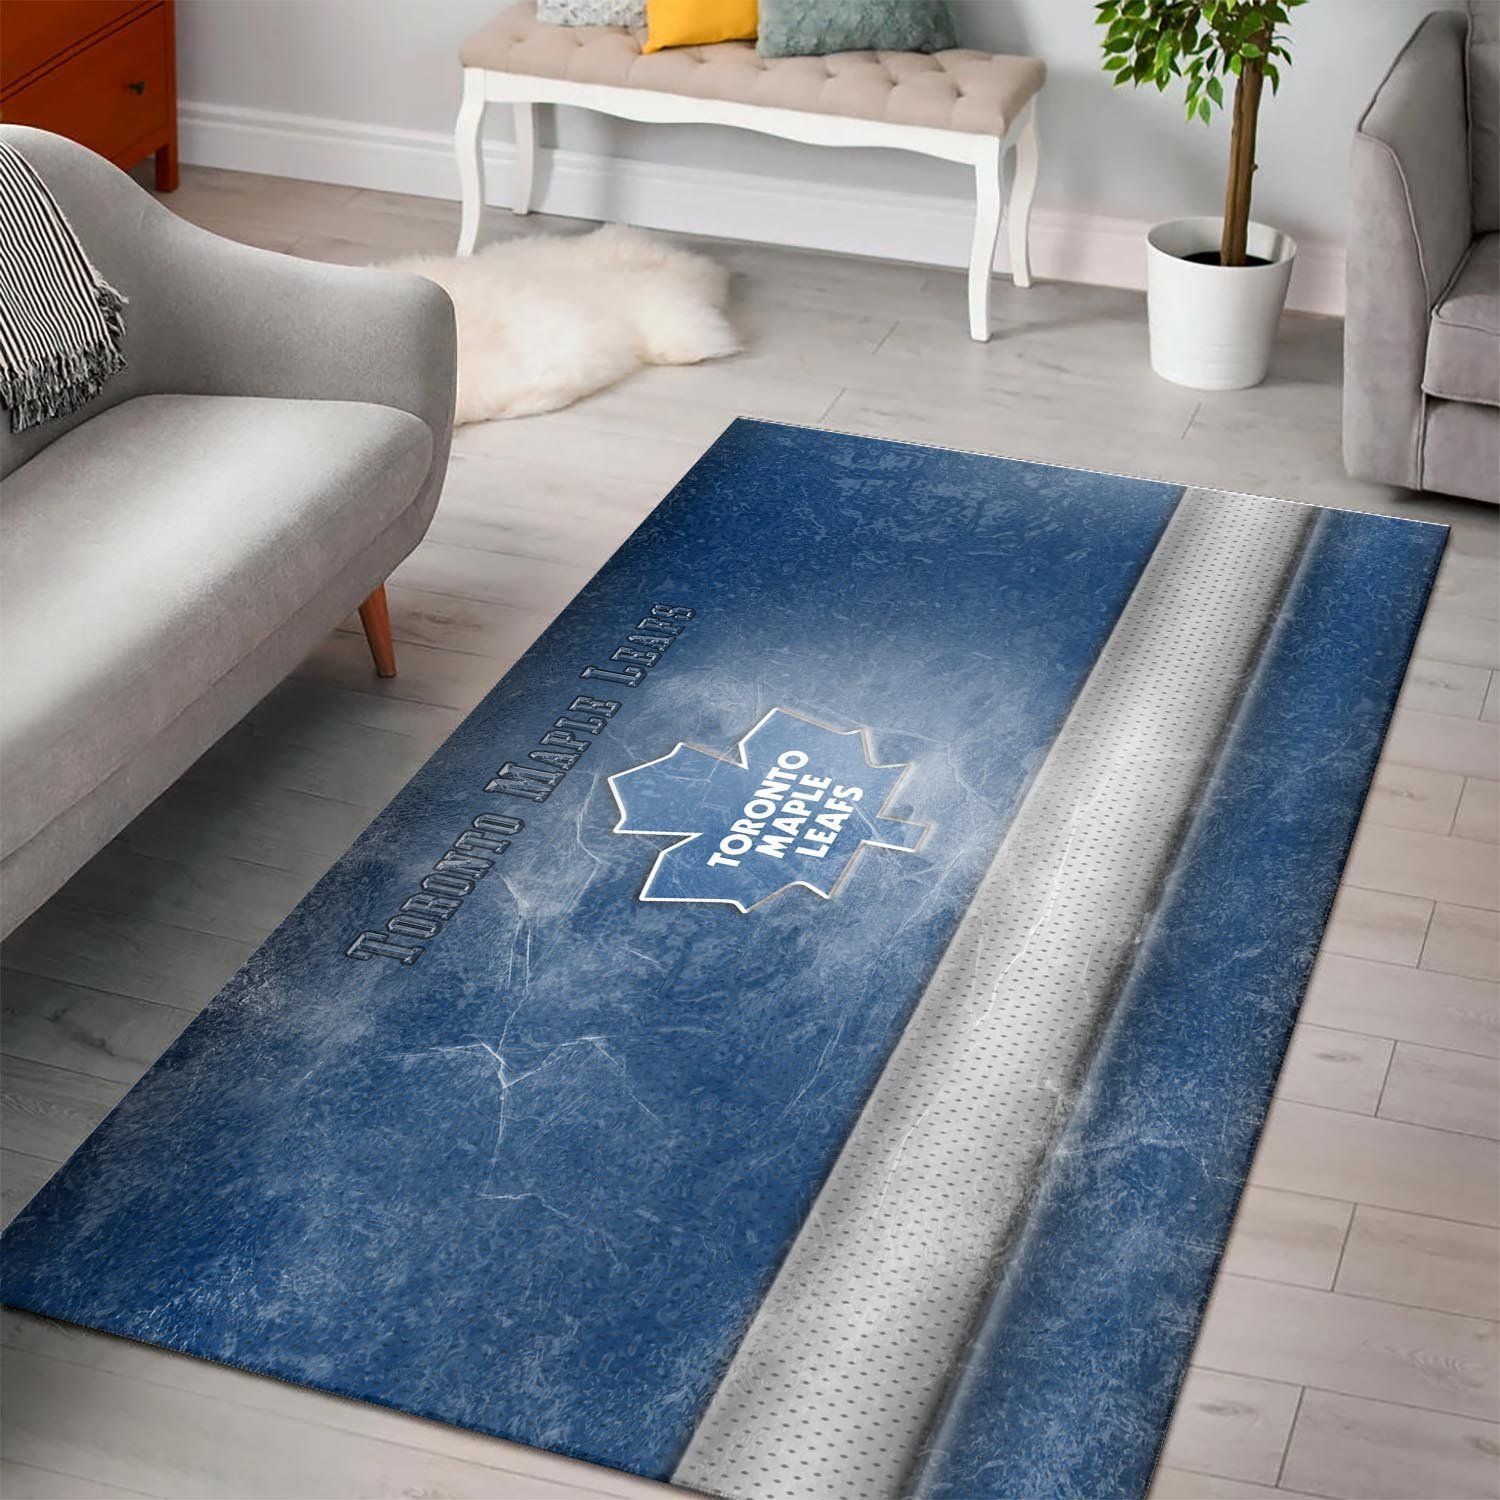 Toronto Maple Leafss Nhl Hockey Team Logo Type 7221 Rug Living Room Area Carpet Home Decor